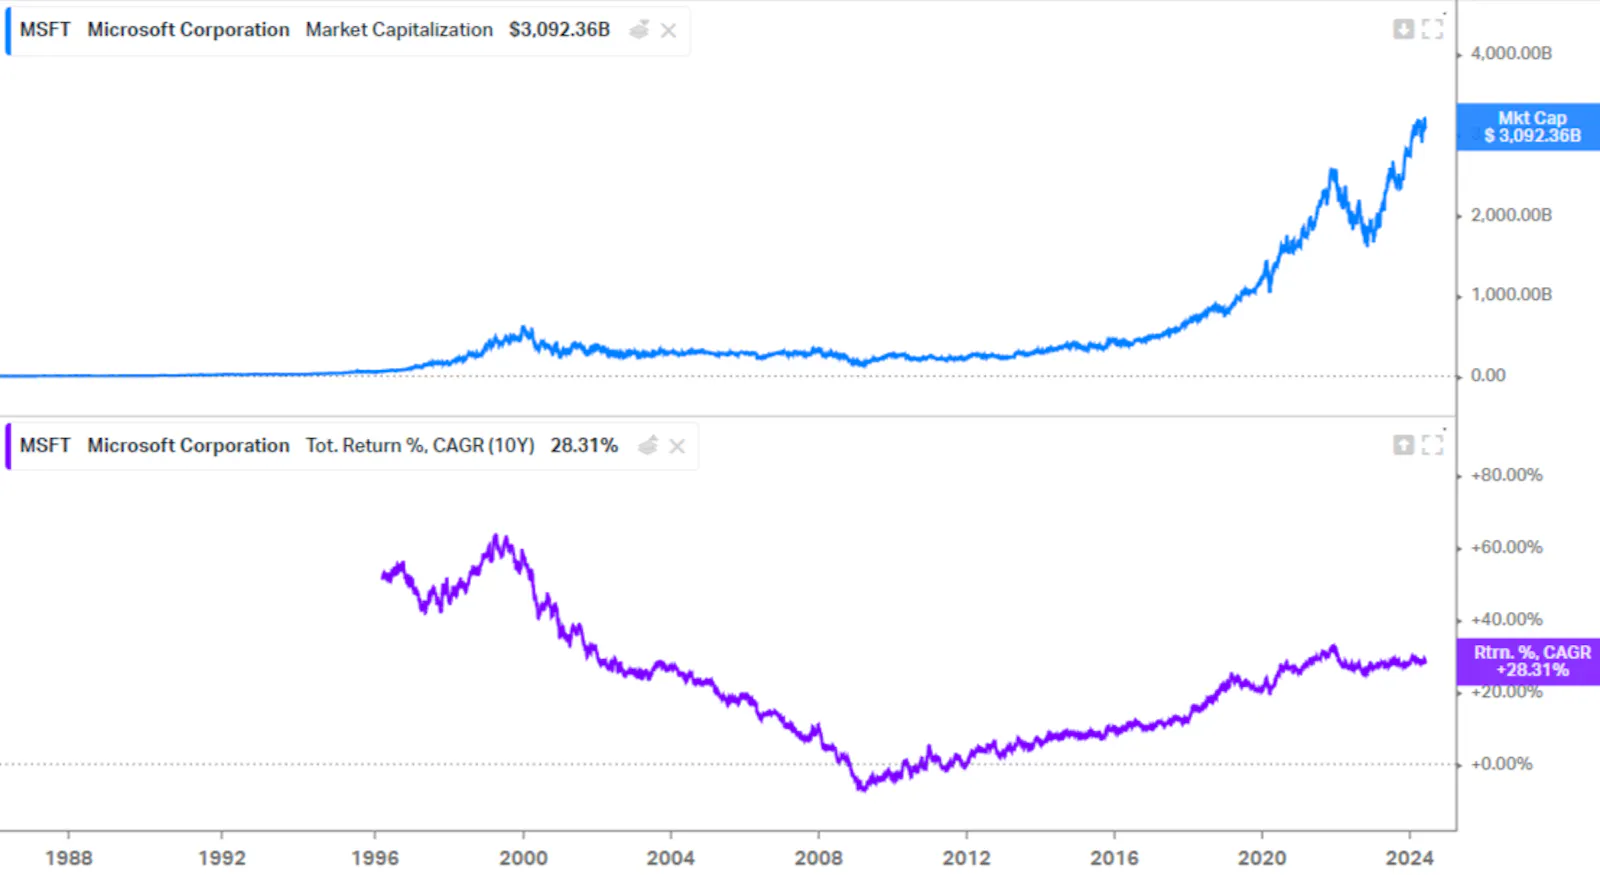 MSFT
Microsoft Corporation
Market Capitalization
$
3,092.36B
and MSFT
Microsoft Corporation
Tot. Return %, CAGR (10Y)
40 years chart